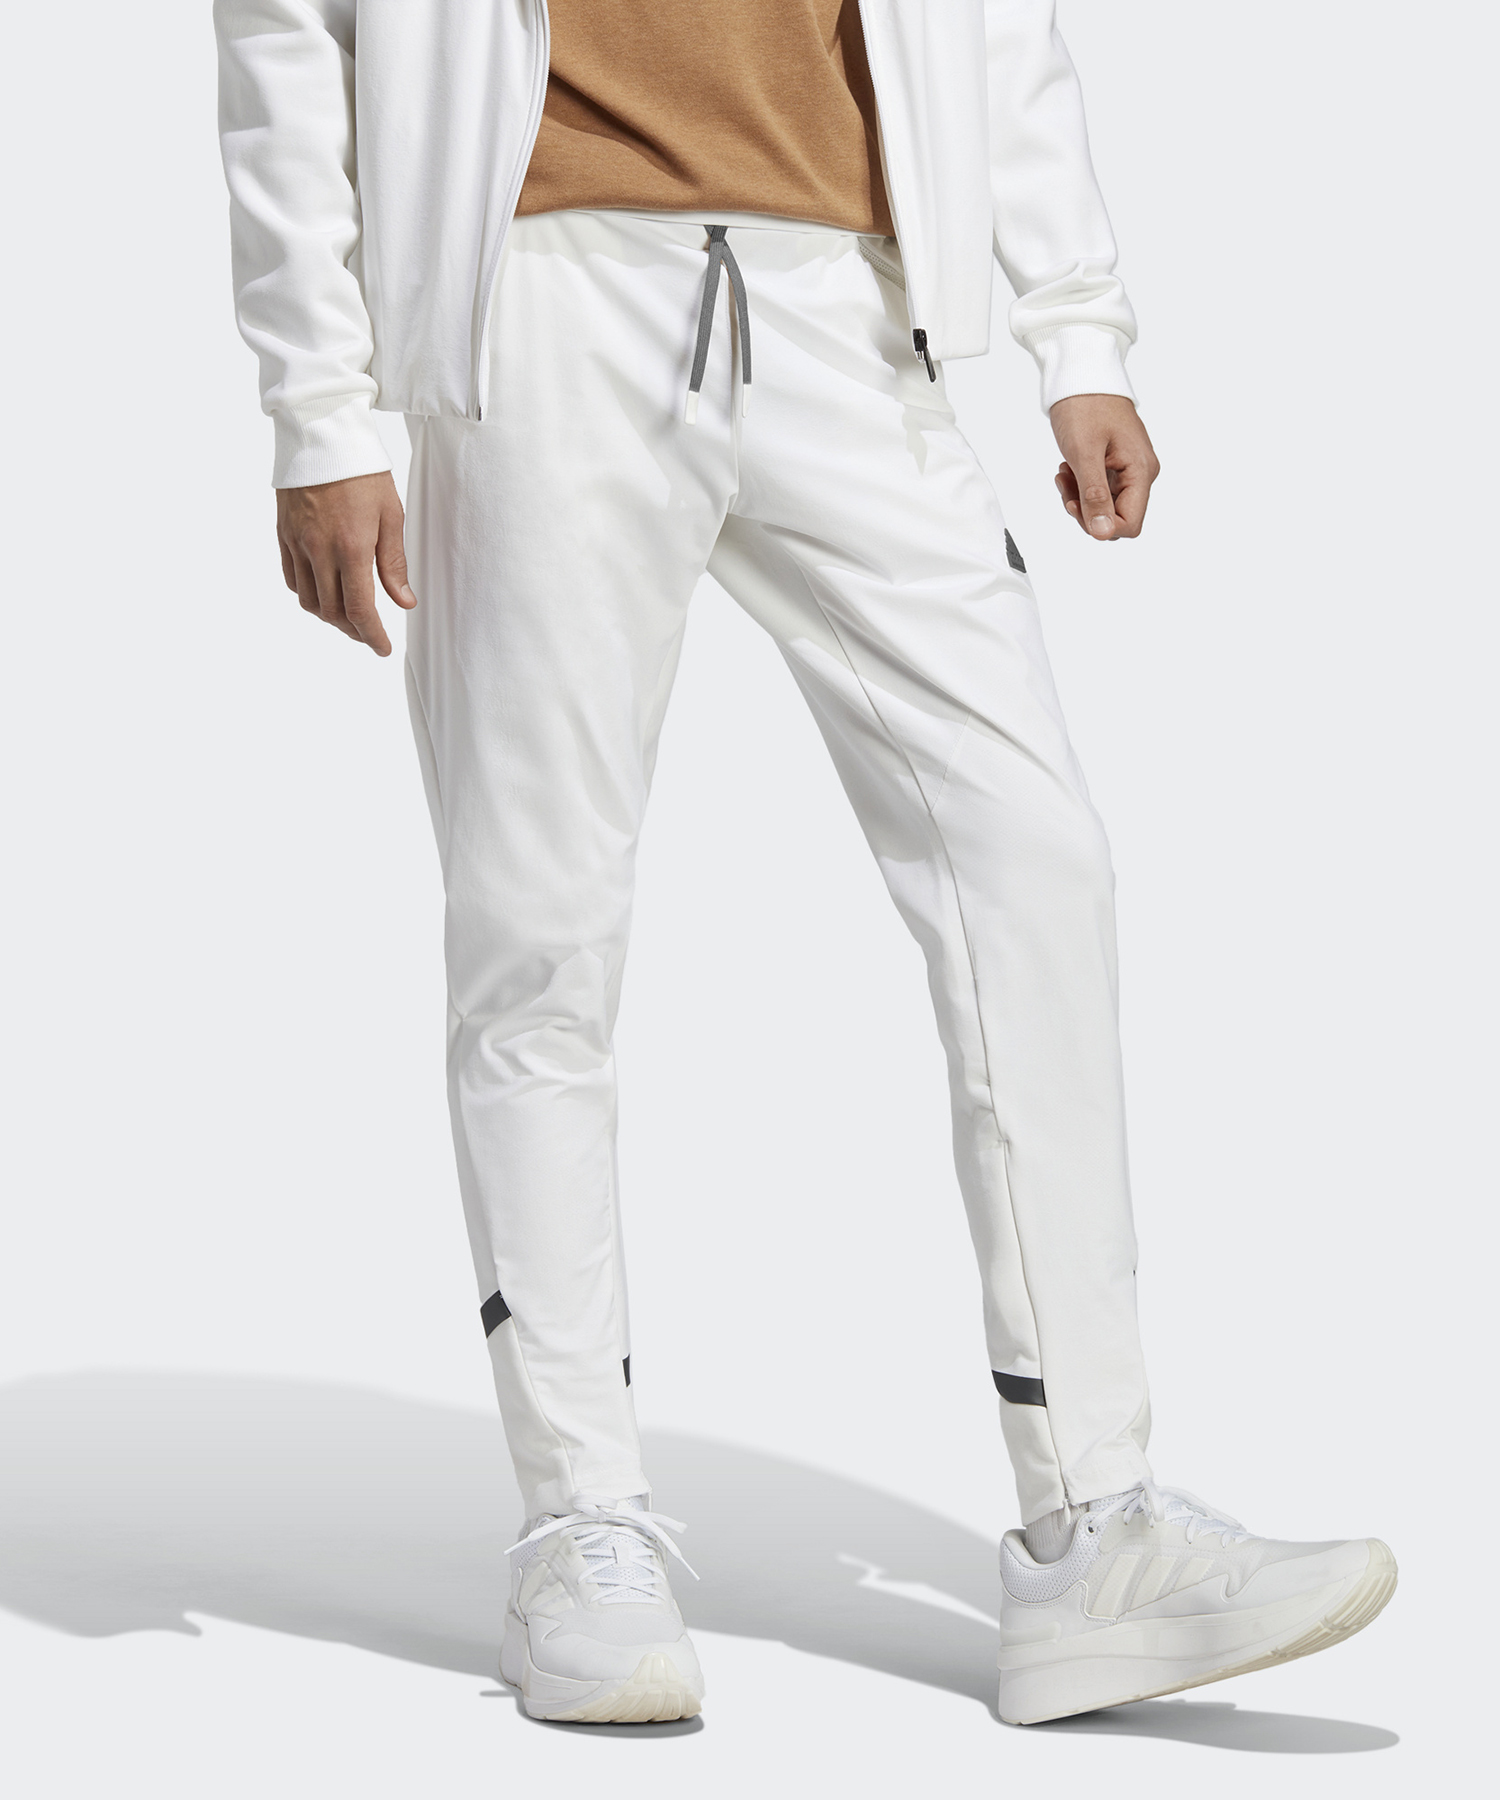 Adidas レディース Z.N.E. Tapp パンツ ホワイト